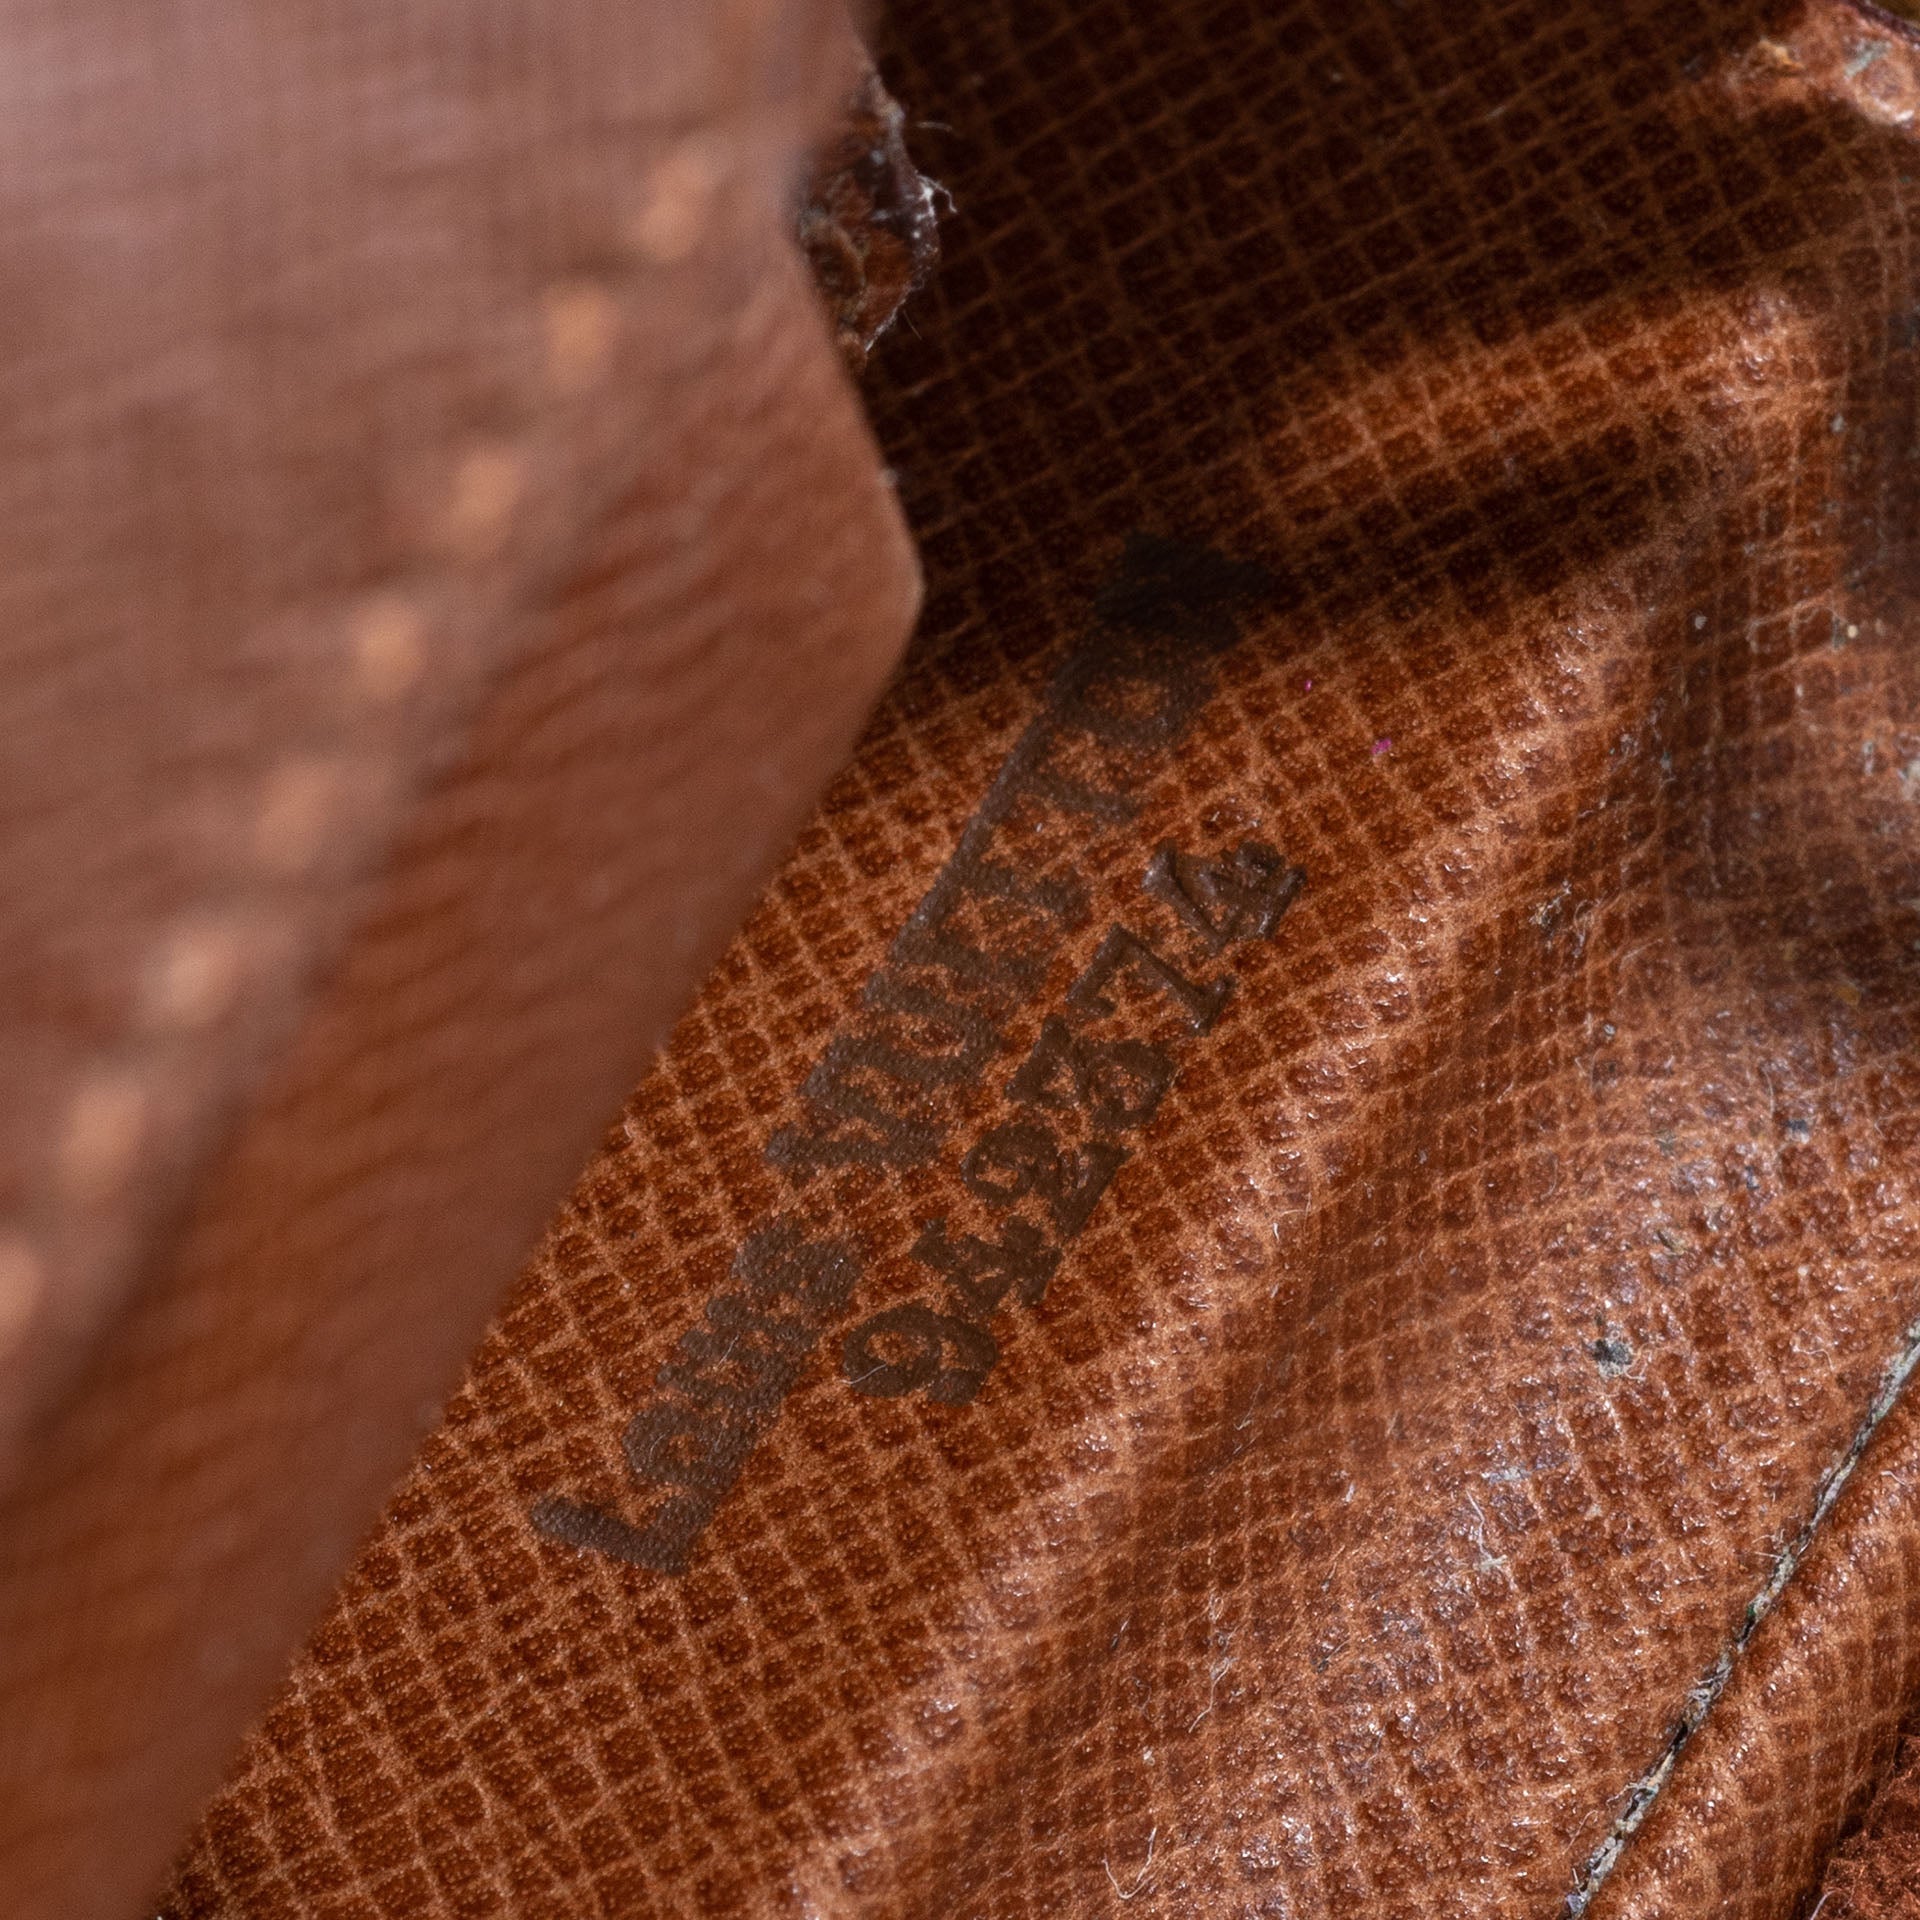 Louis Vuitton 90s vintage mini belt bag in orange epi leather